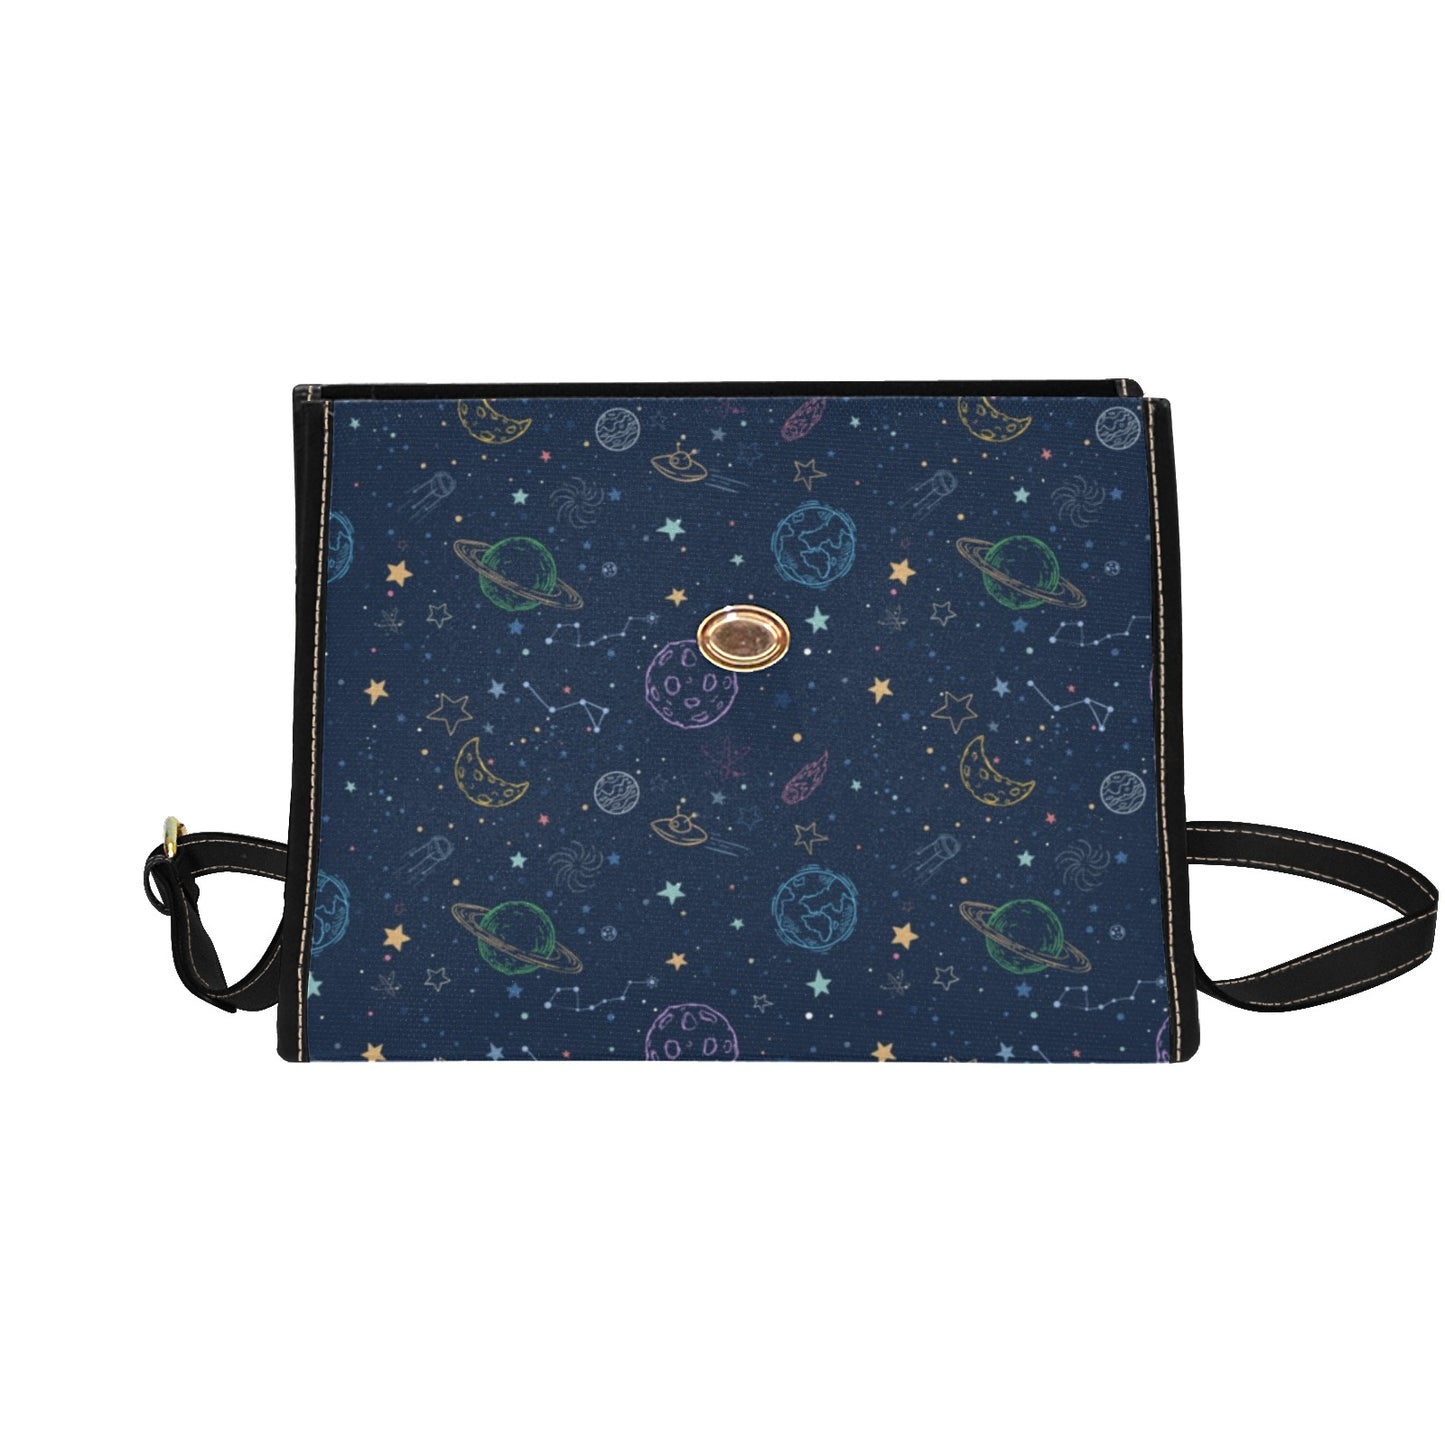 Planets Canvas Satchel Purse bag, Galaxy Constellation Space Stars Small Waterproof Cute Women Crossed Body Vegan Leather Strap Handbag Starcove Fashion